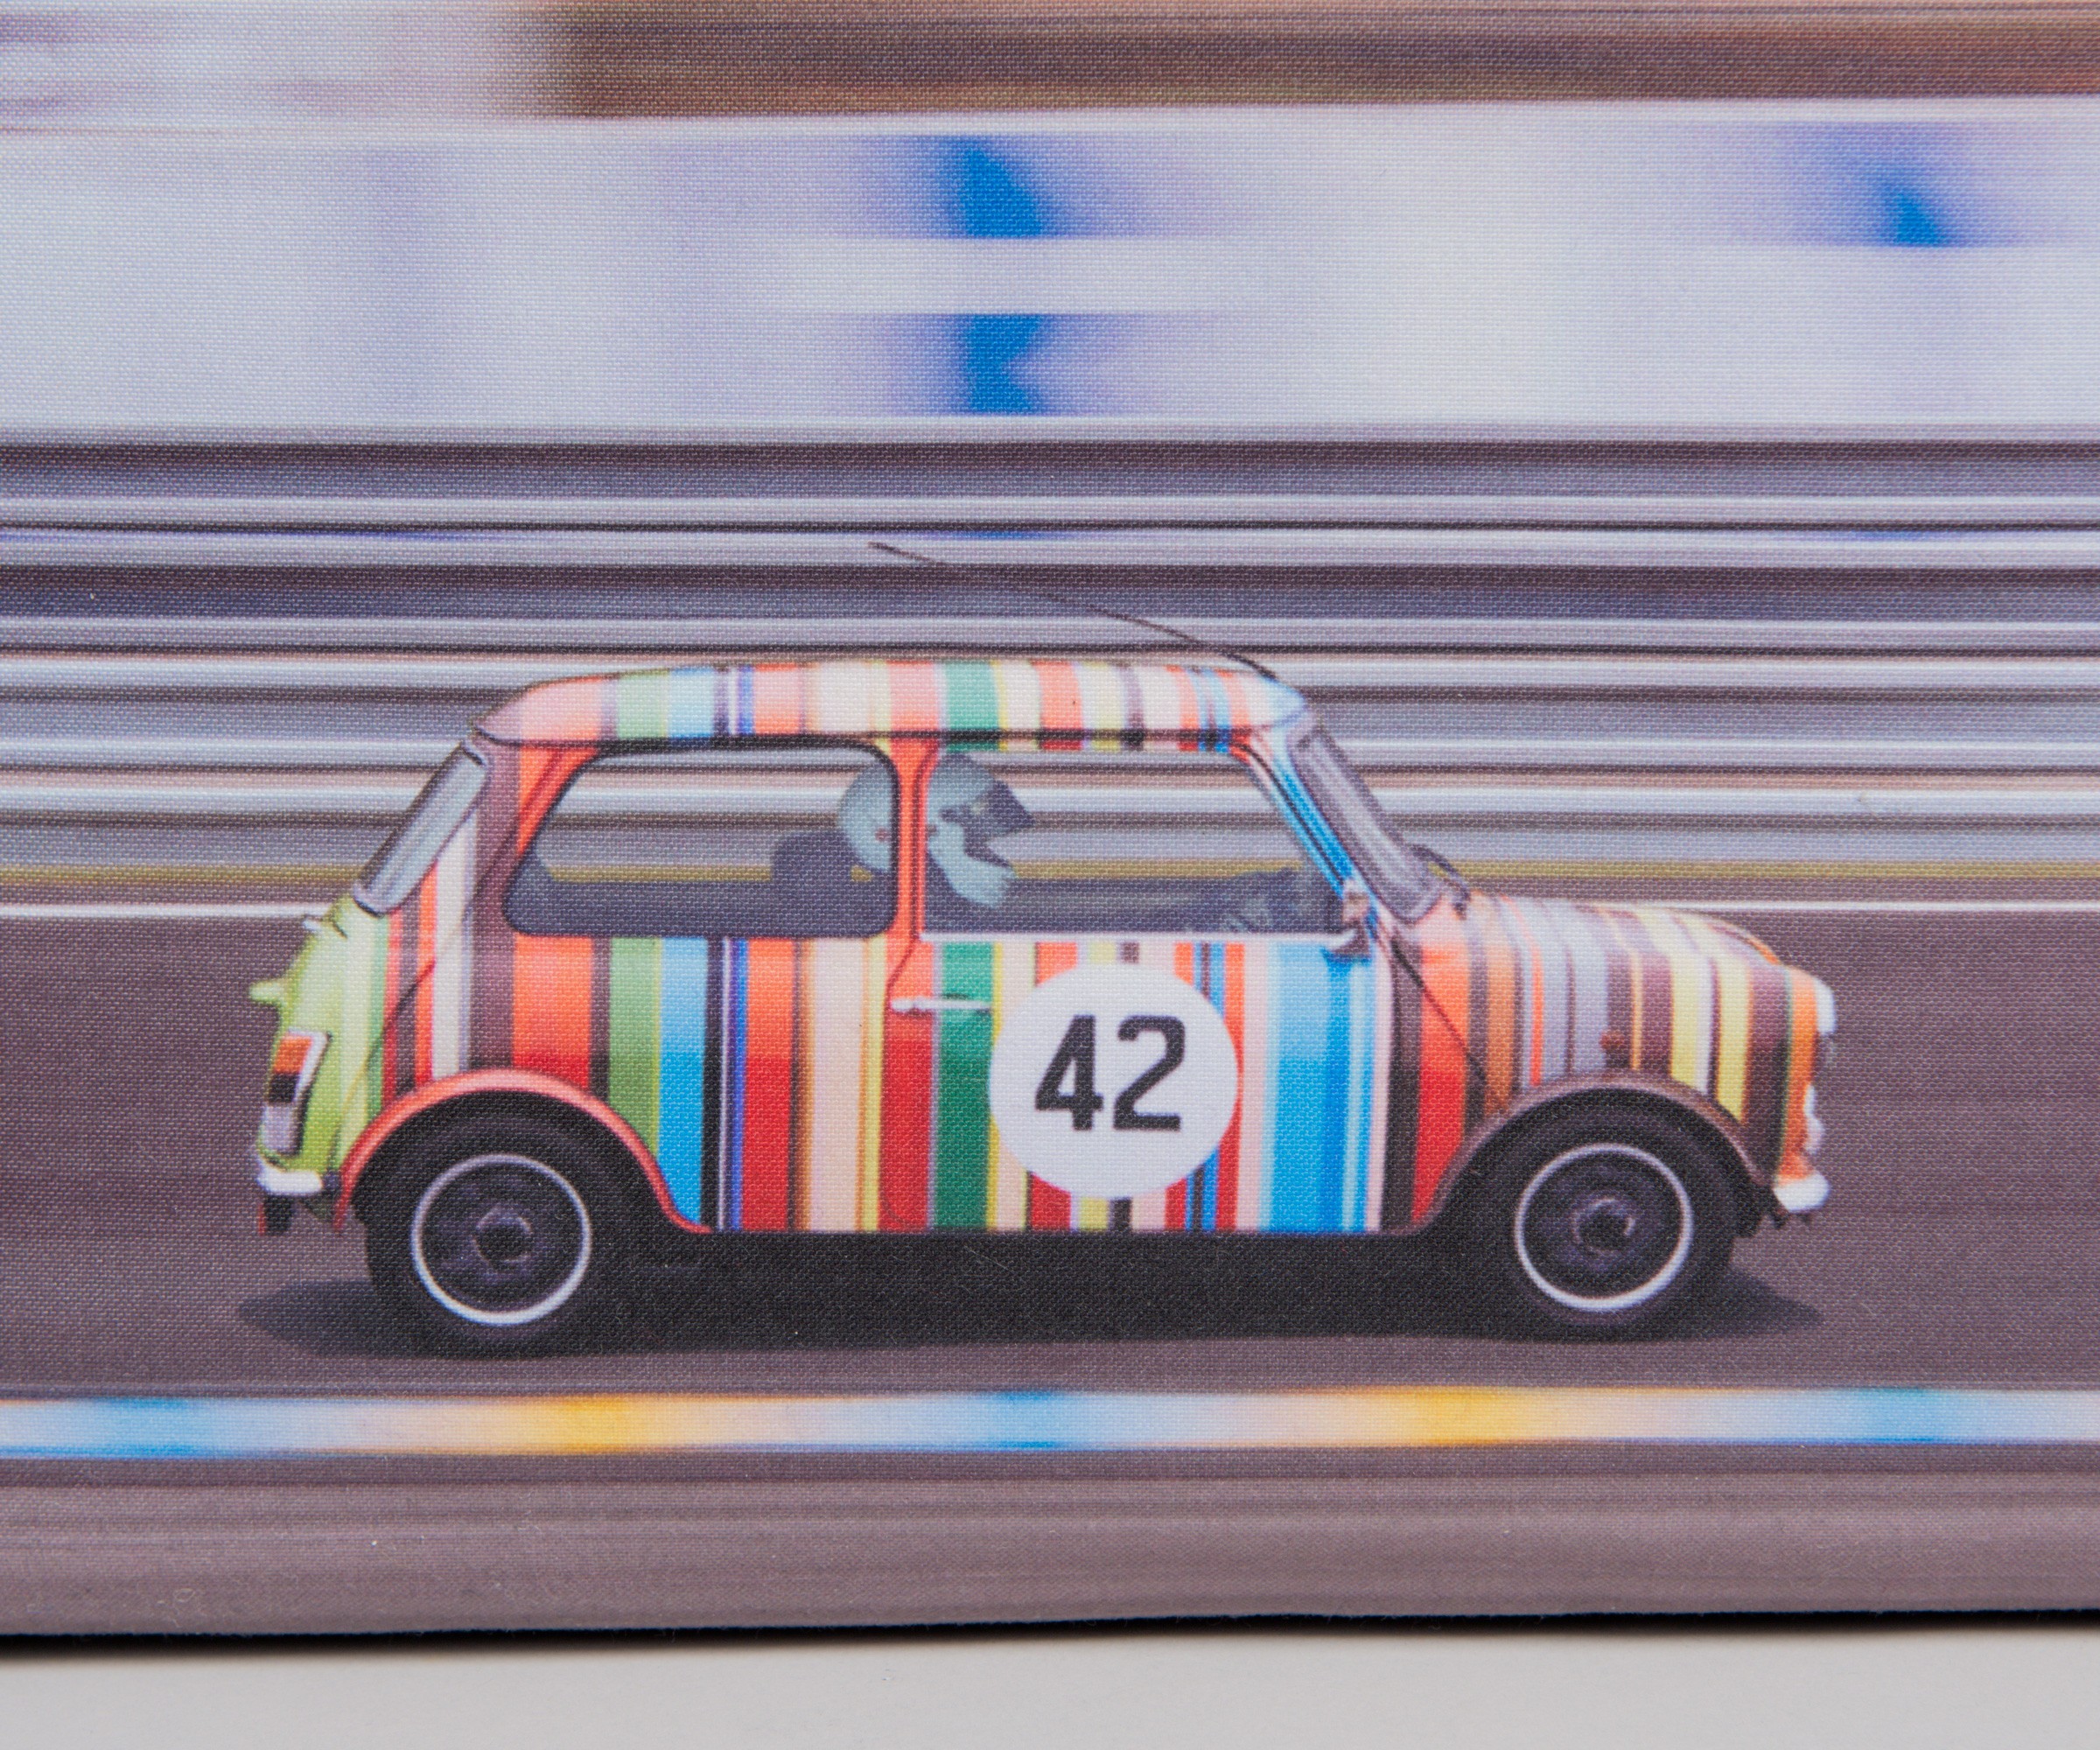 Paul Smith 'Racing Mini' Canvas Holdall Weekend Bag Multi